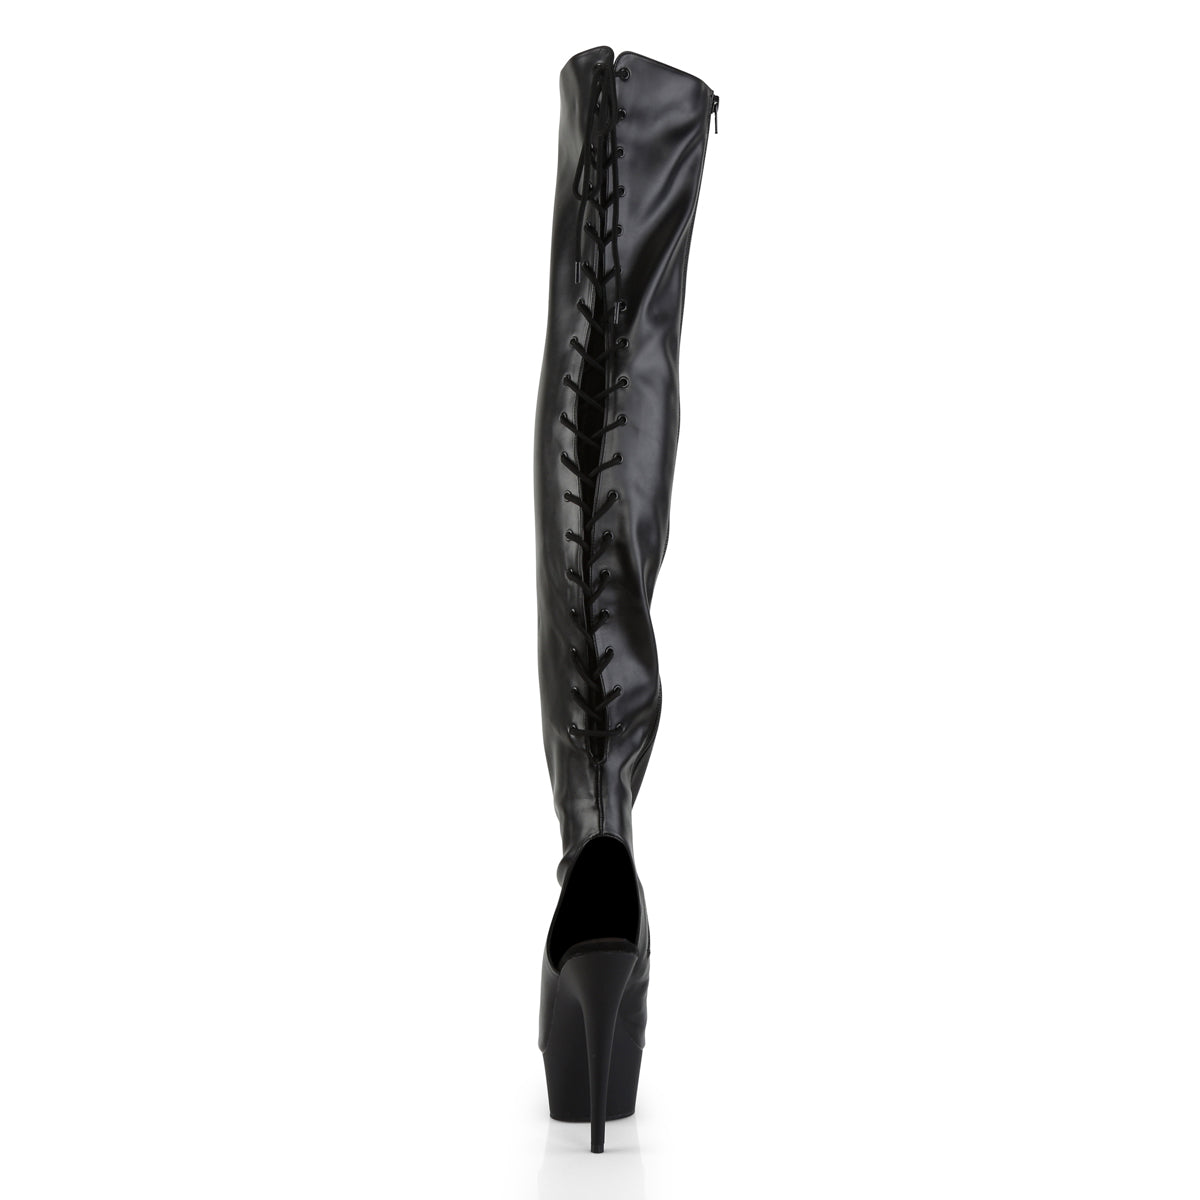 DELIGHT-3017 Pleaser 6 Inch Heel Black Pole Dancer Platforms-Pleaser- Sexy Shoes Fetish Footwear